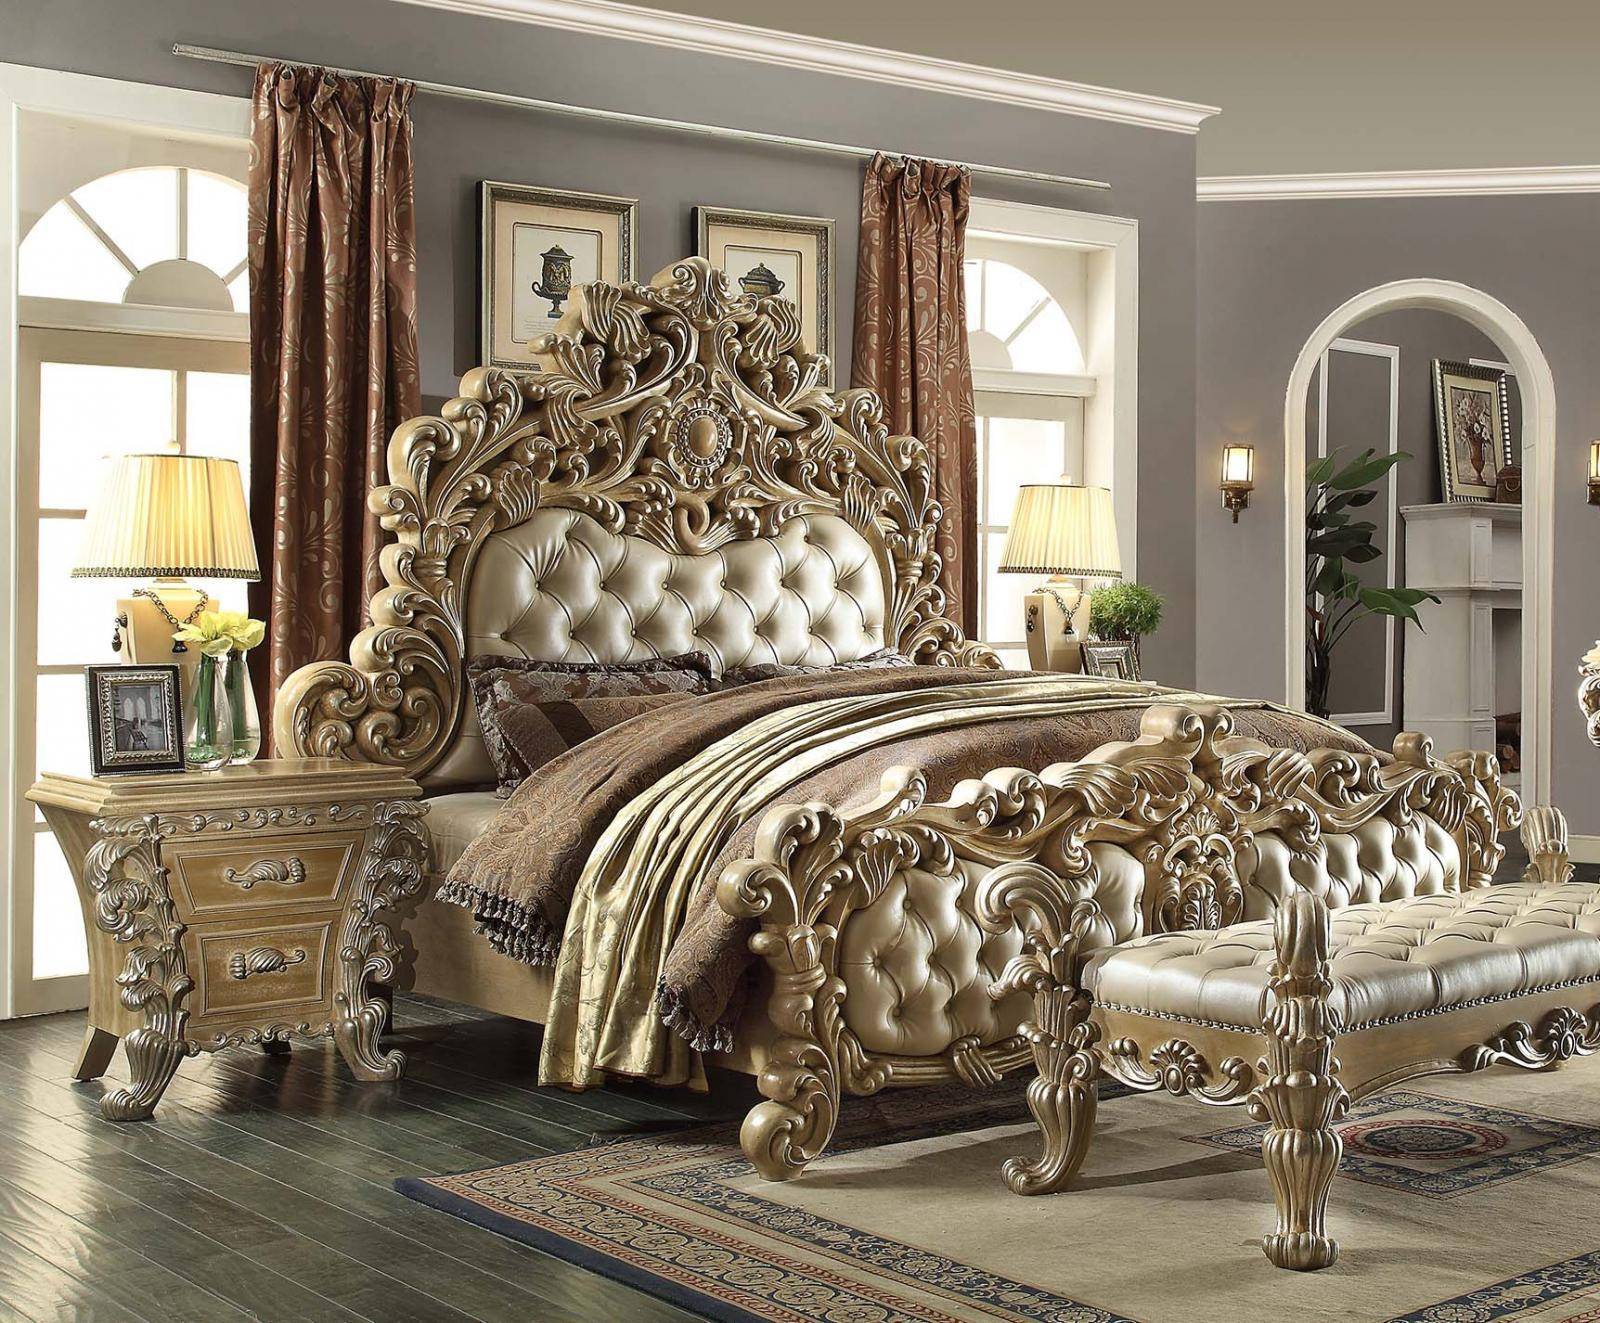 bedroom furniture california king